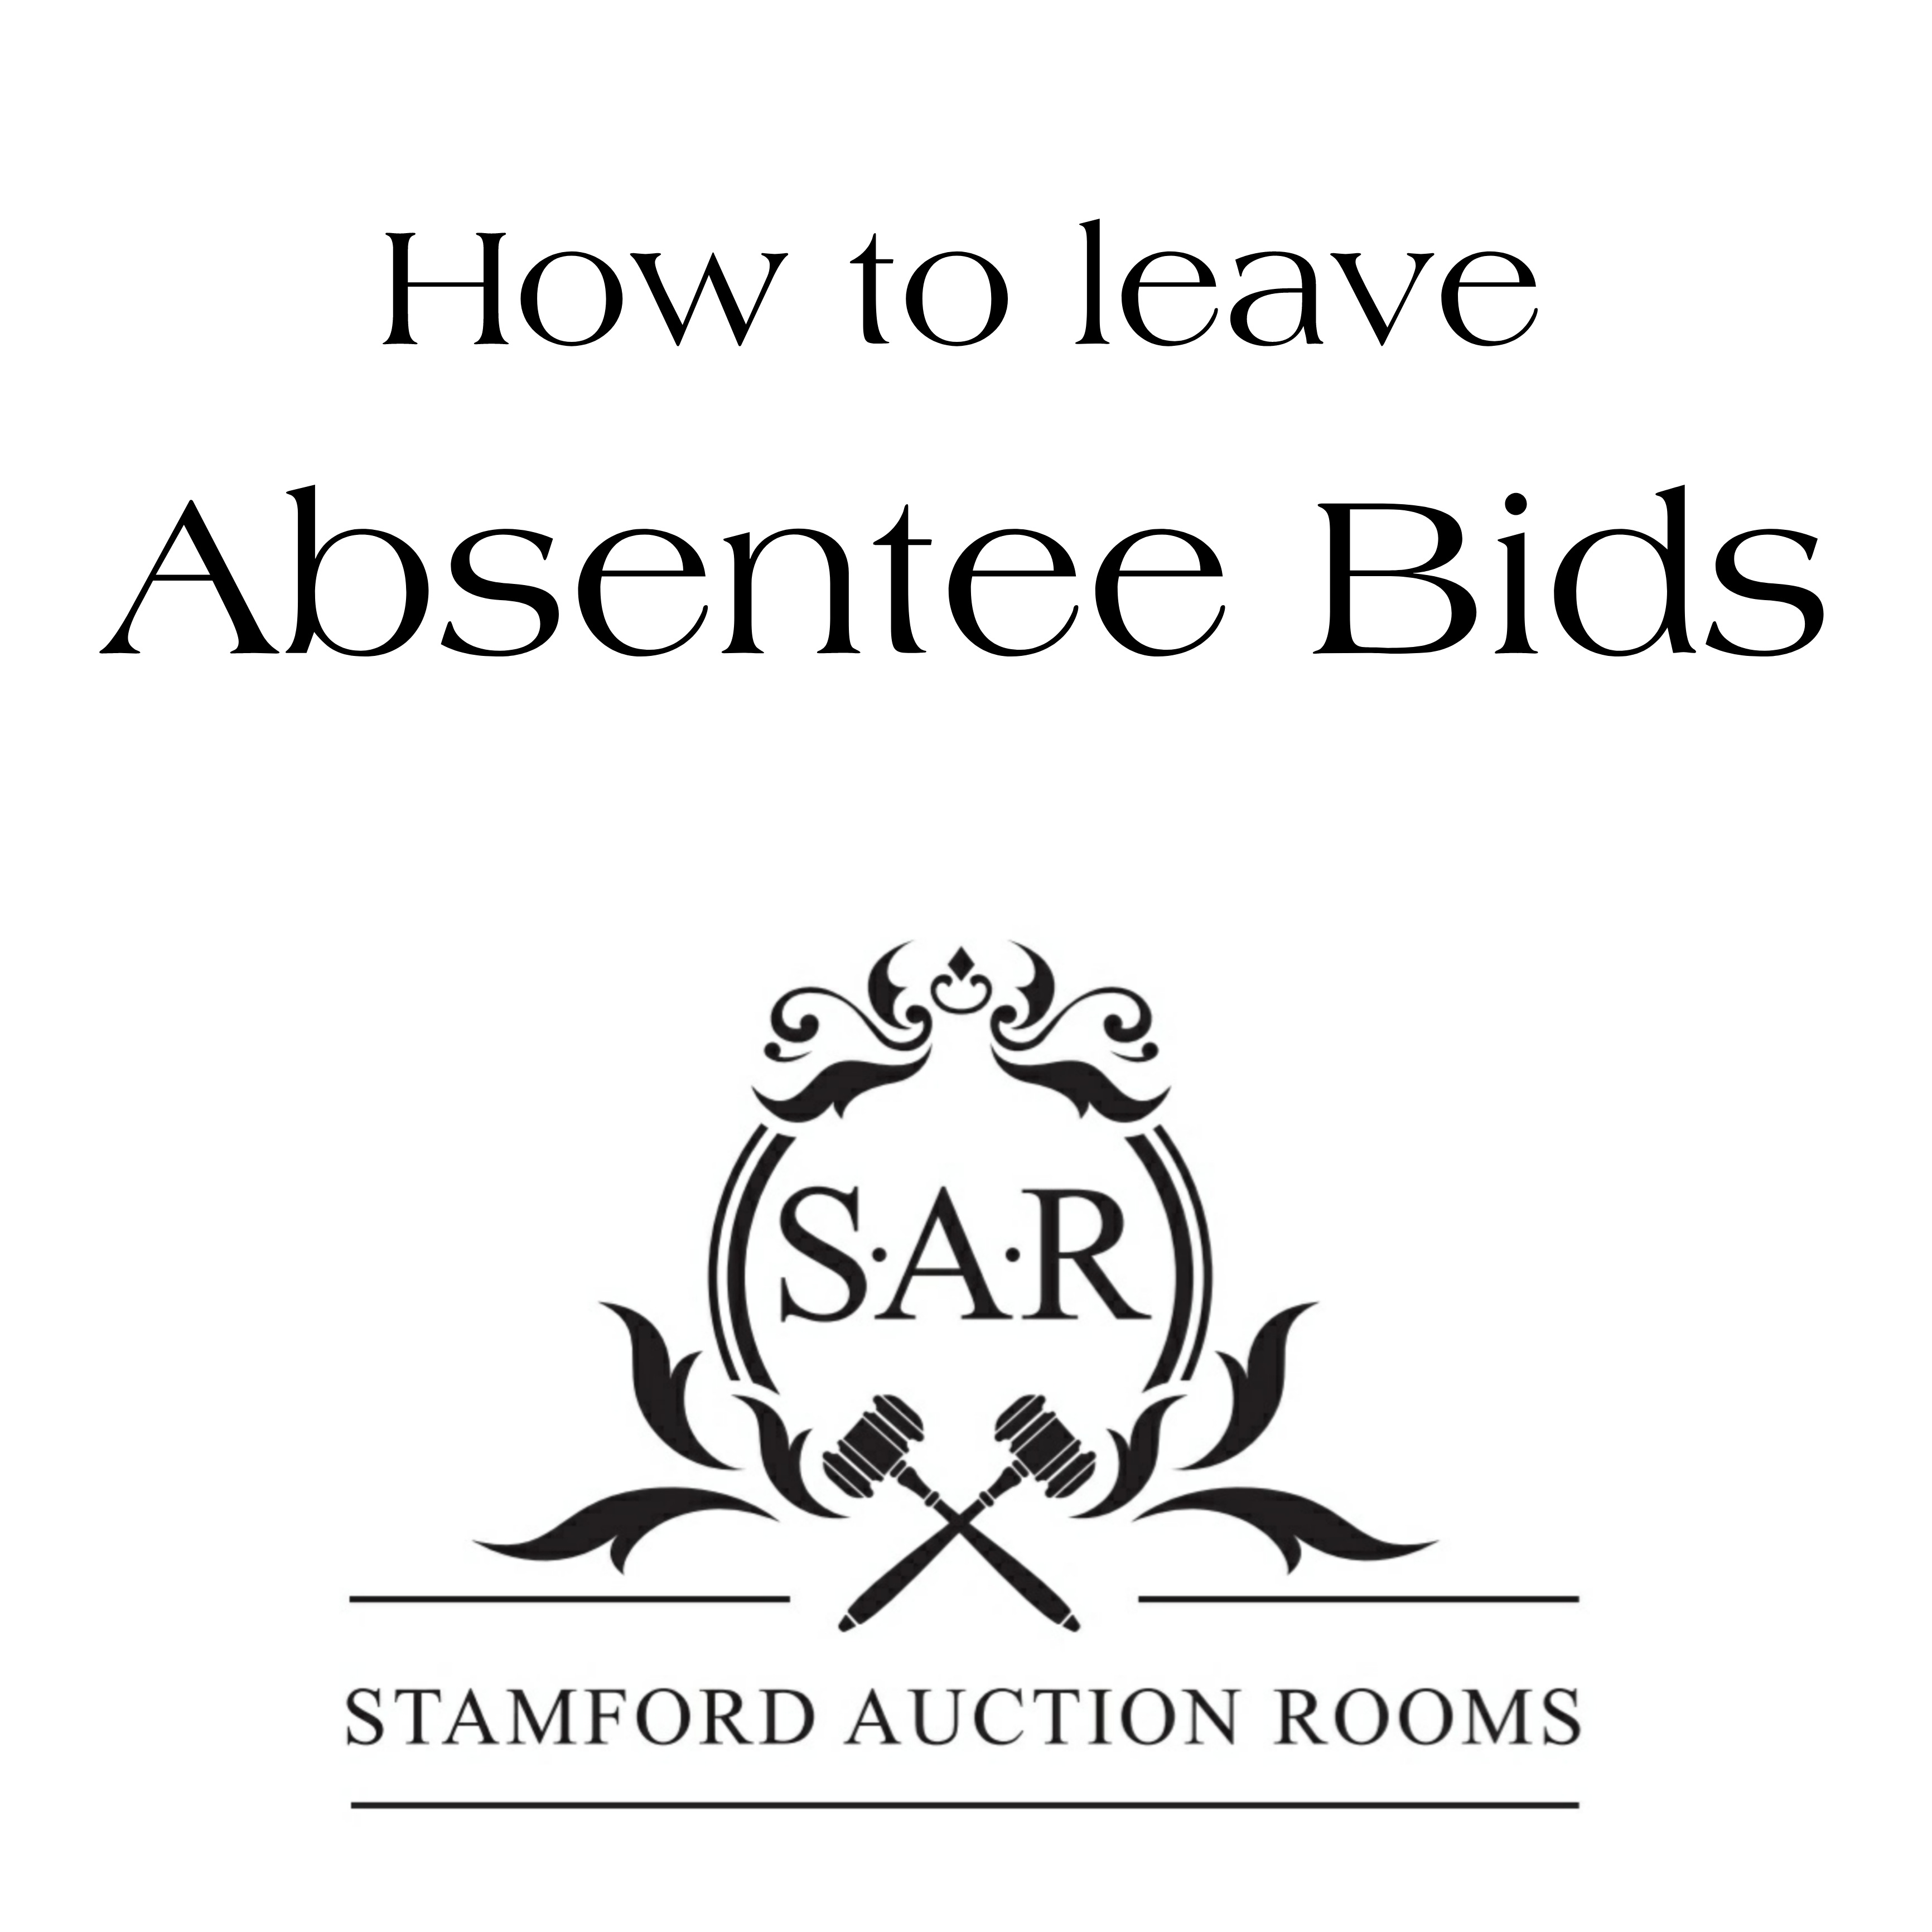 A guide to leaving an absentee bid